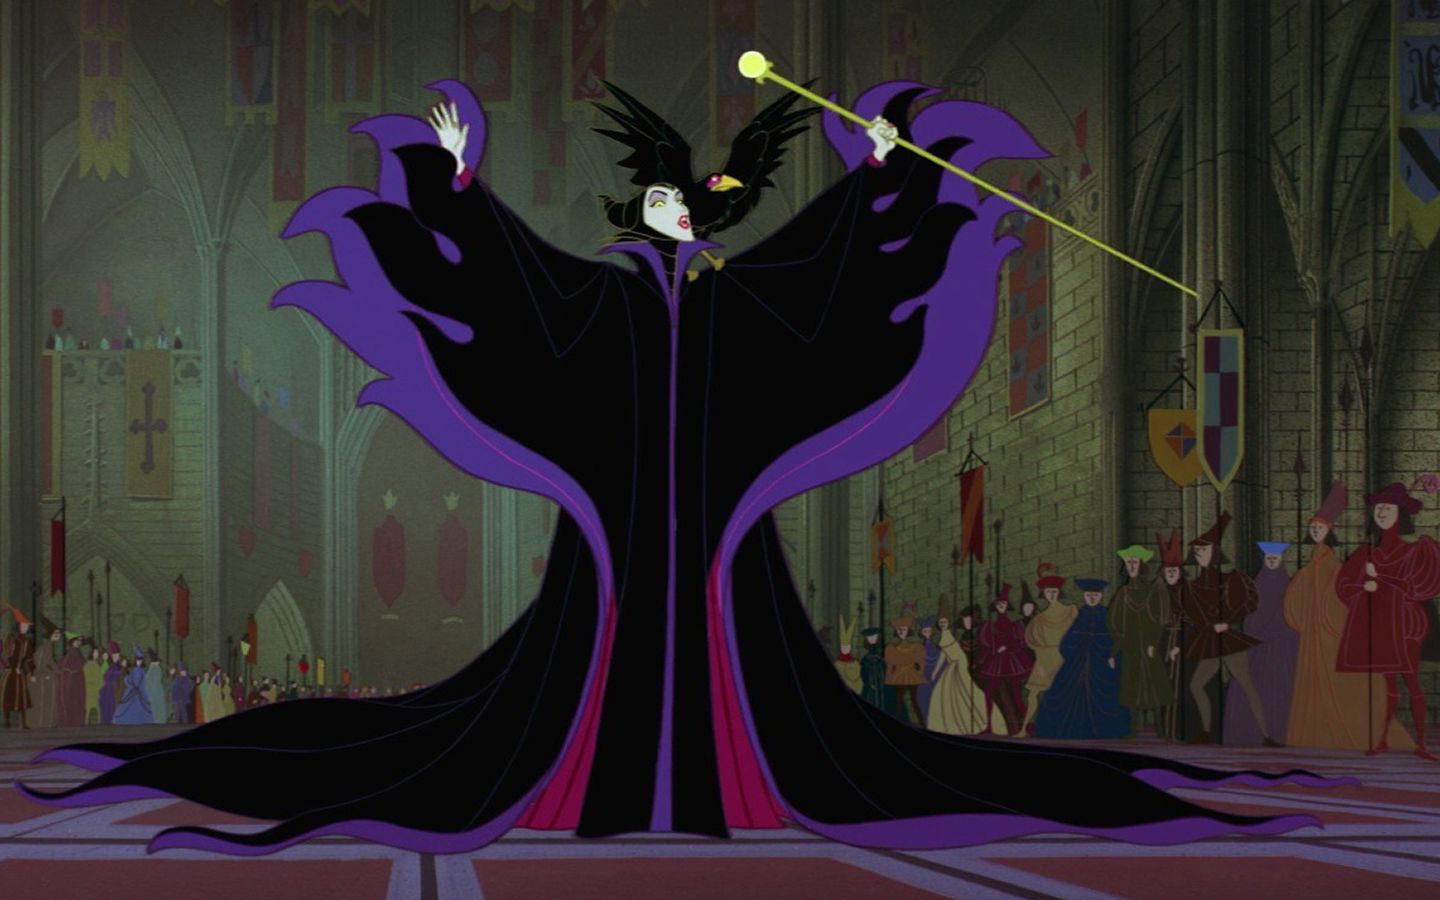 Maleficent from Disney's Sleeping Beauty